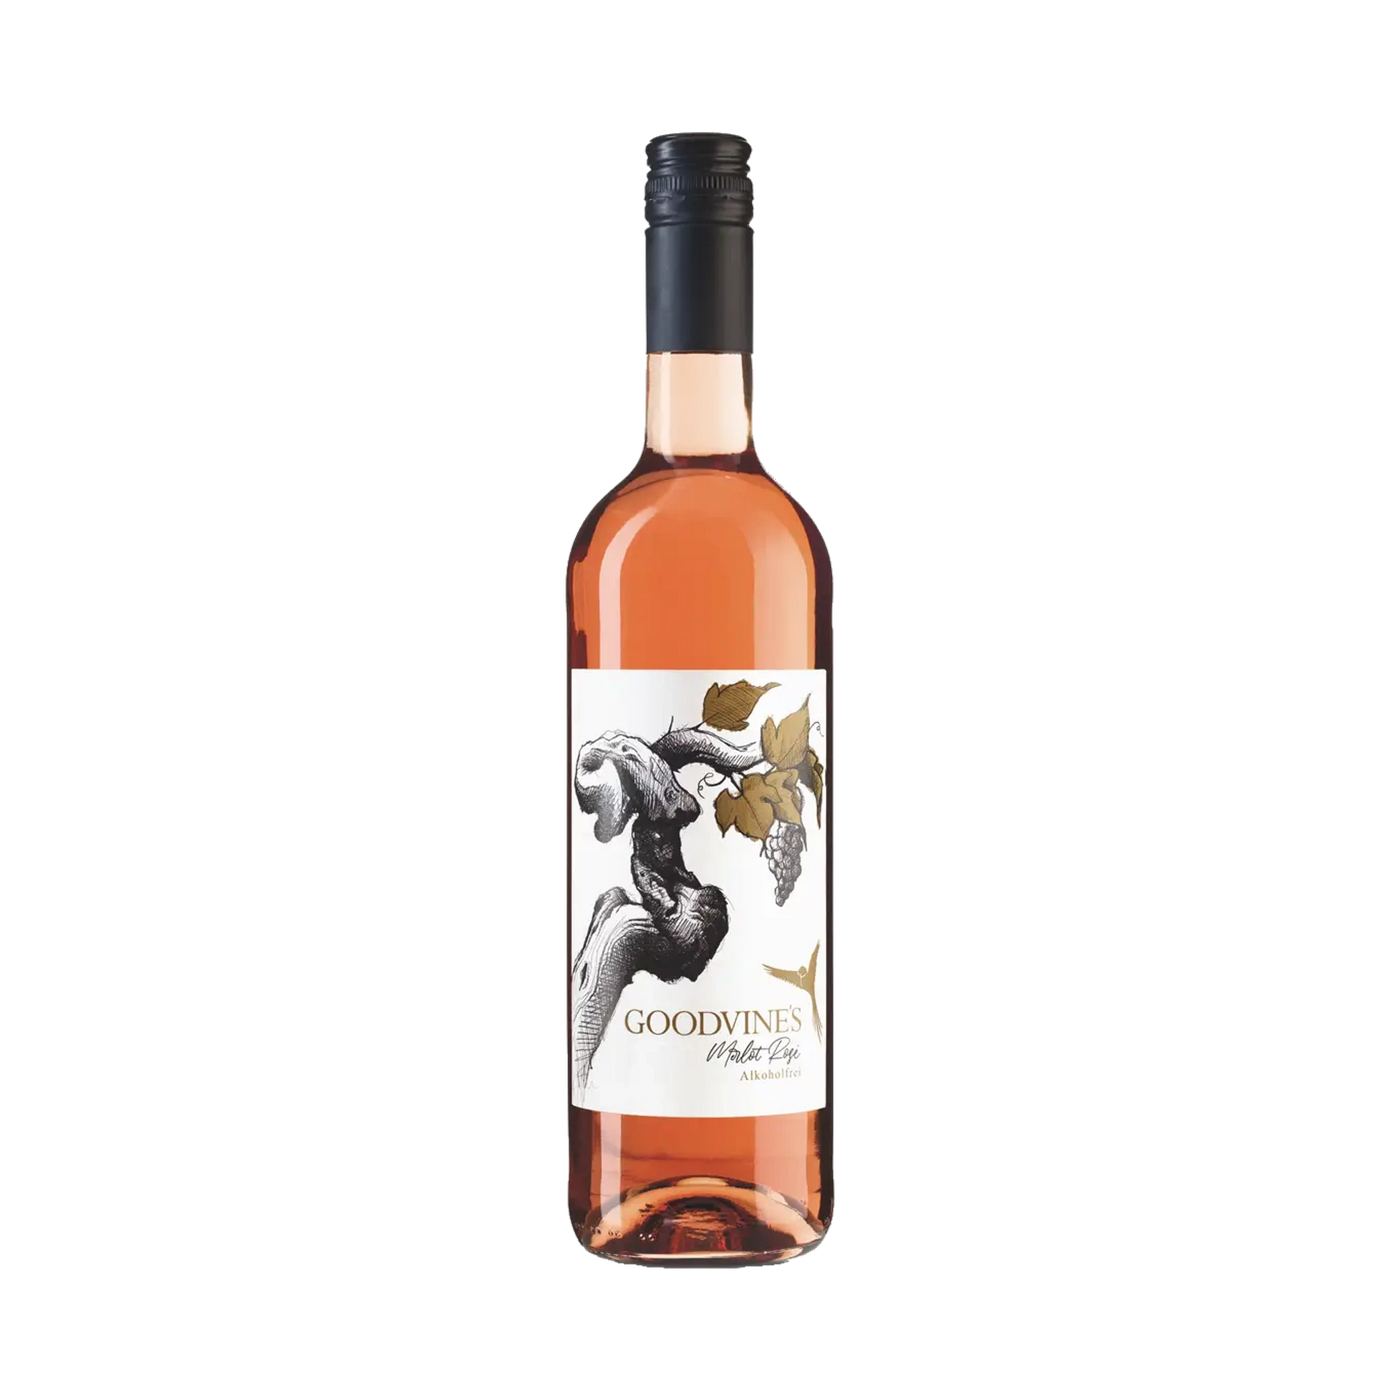 Goodvines Canada - alcohol free merlot rose - great tasting non-alcoholic wine